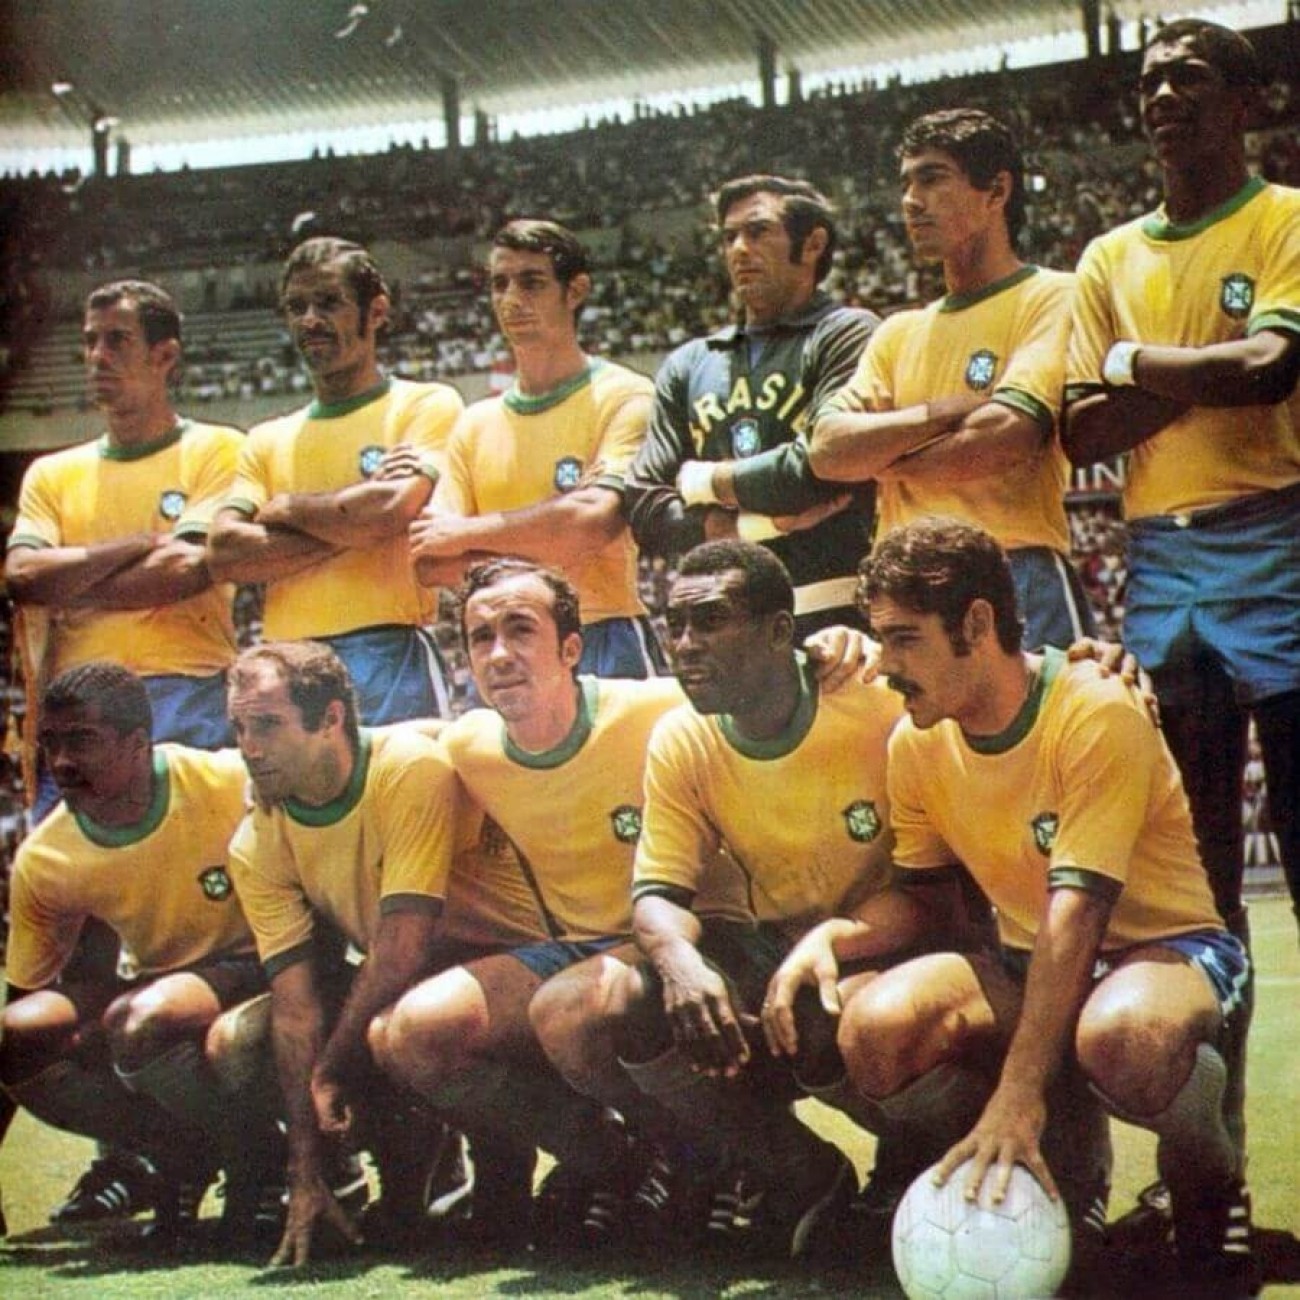 brazil 1970 jersey